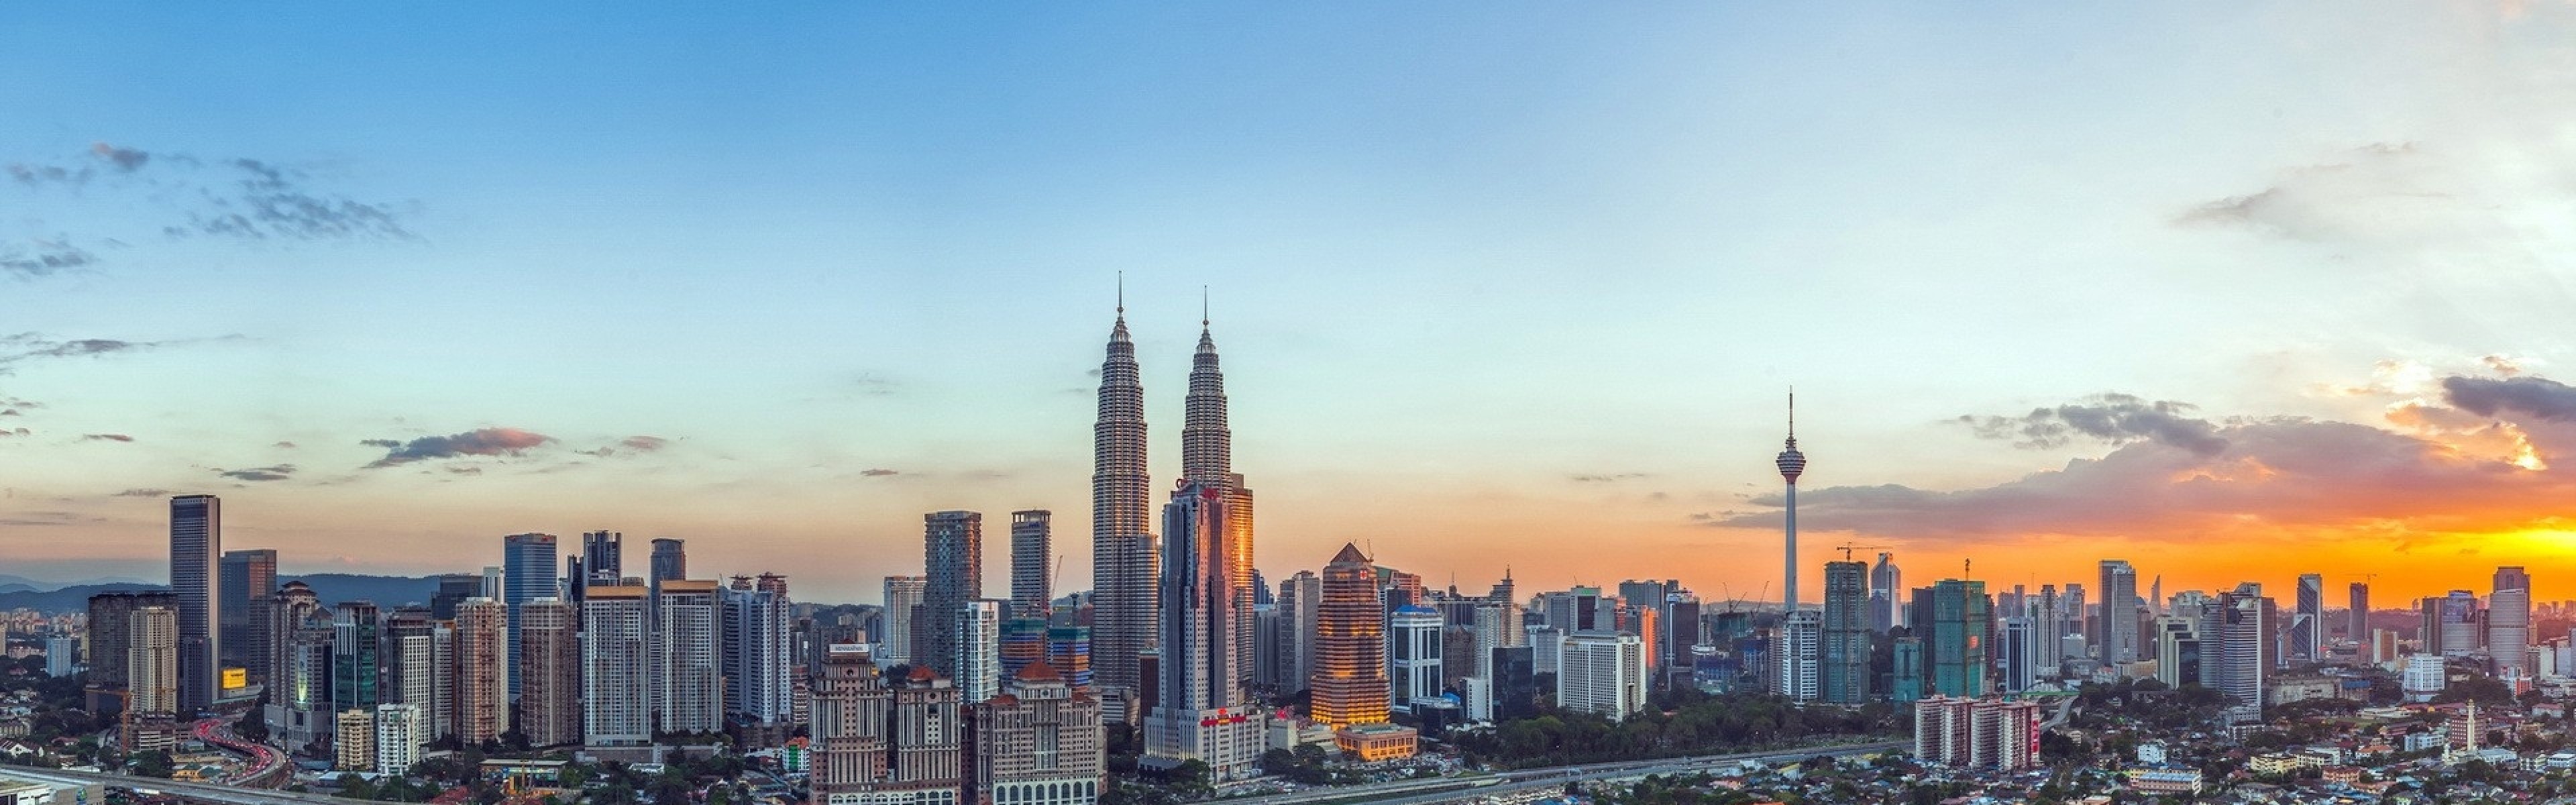 3840x1200  Wallpaper malaysia, petronas twin towers, sky, top view